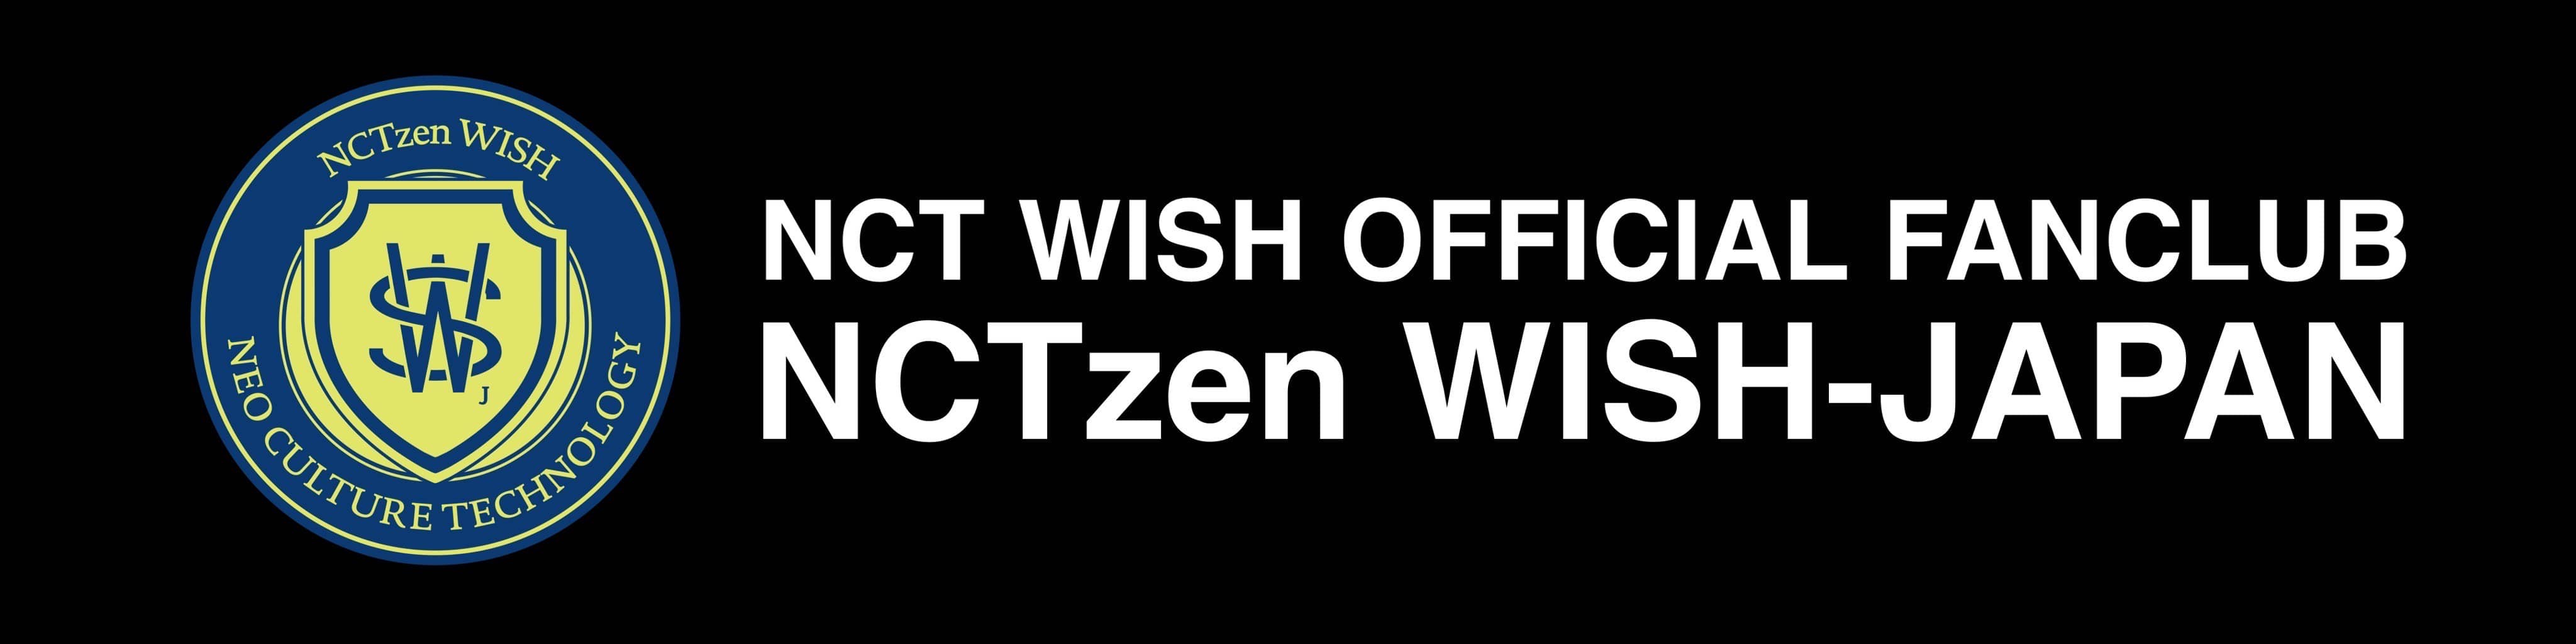 NCT WISH OFFICIAL FANCLUB NCTzen WISH-JAPAN